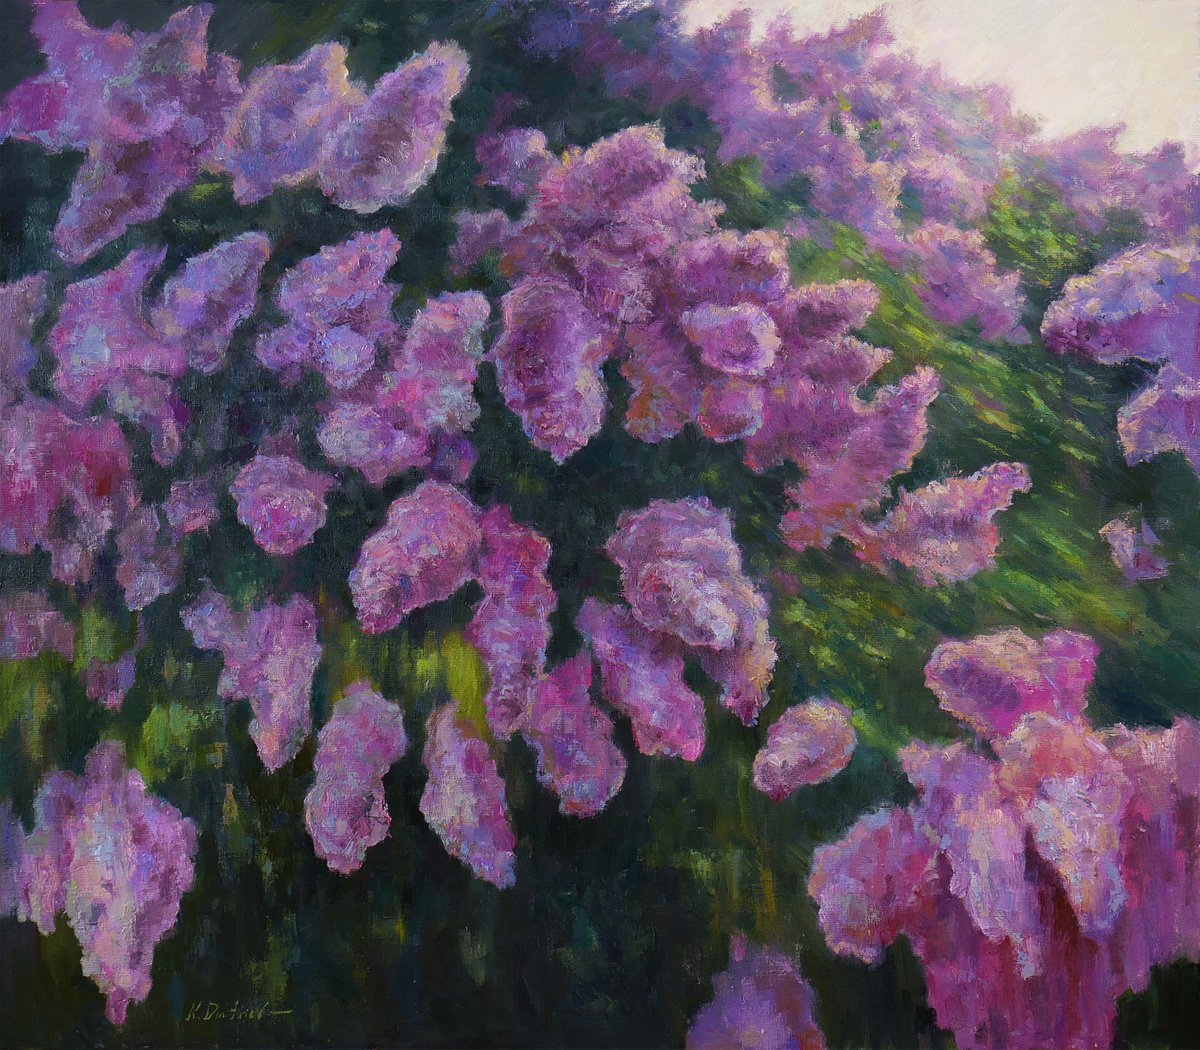 Lilacs fading into light - Lilacs painting by Nikolay Dmitriev